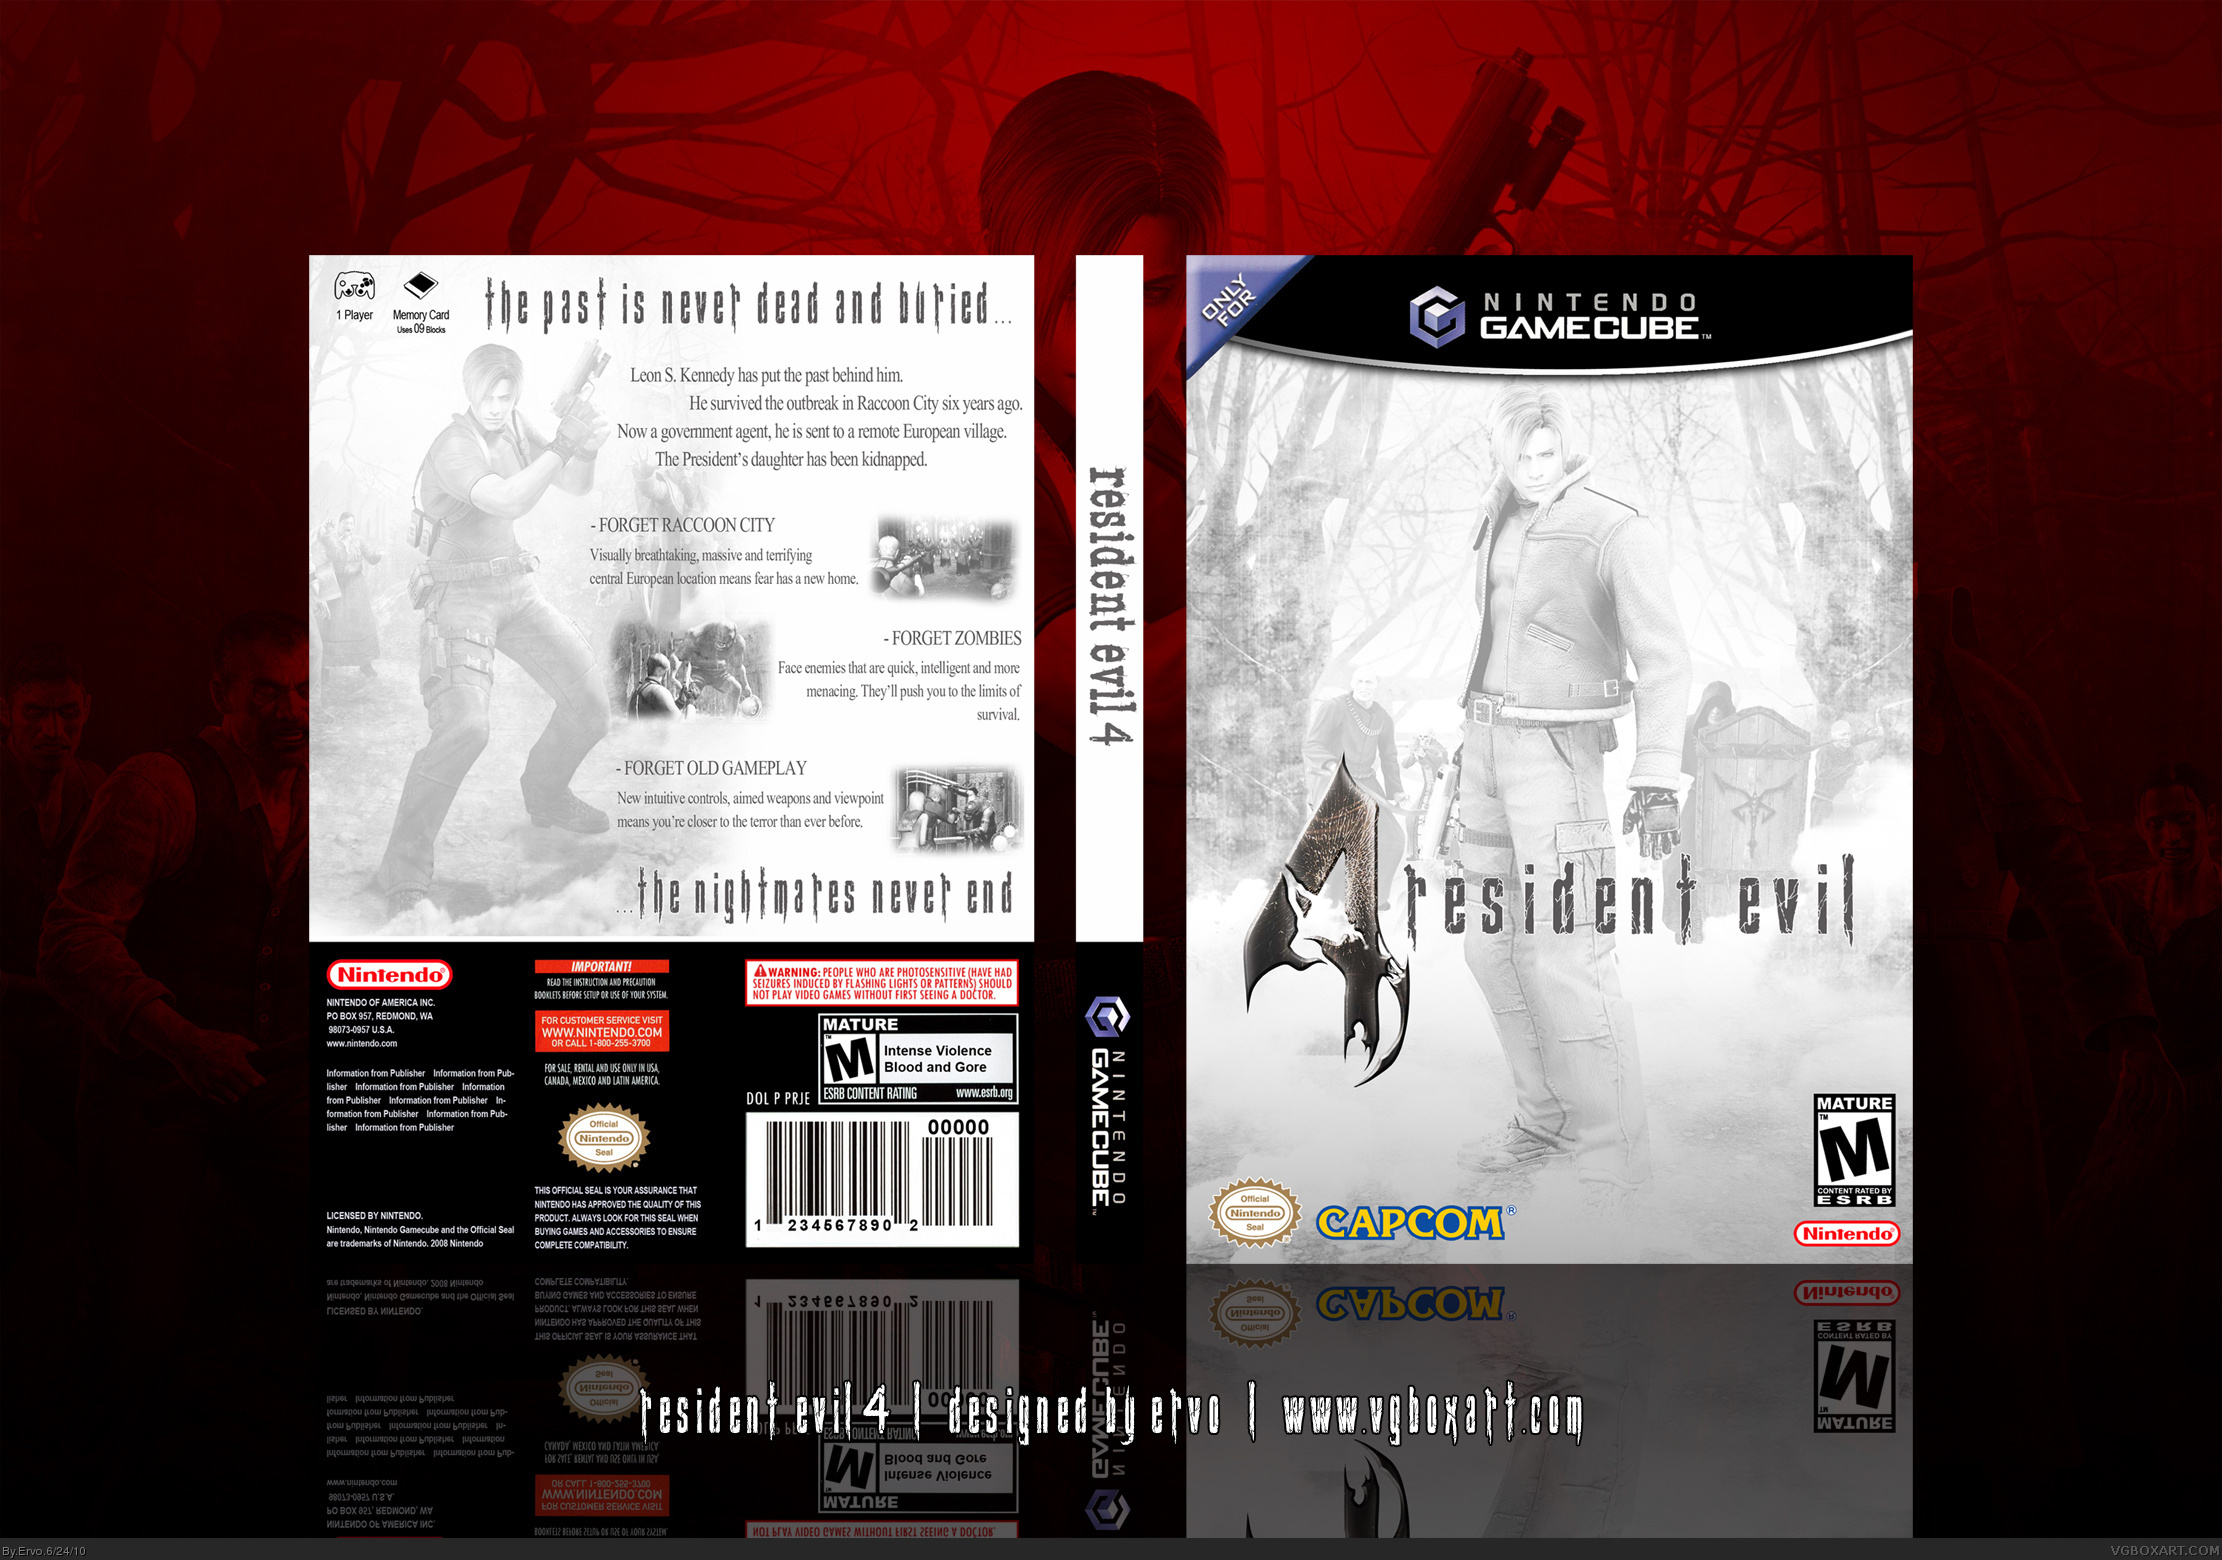 Resident Evil 4 Prima cover diablo 2 cover art